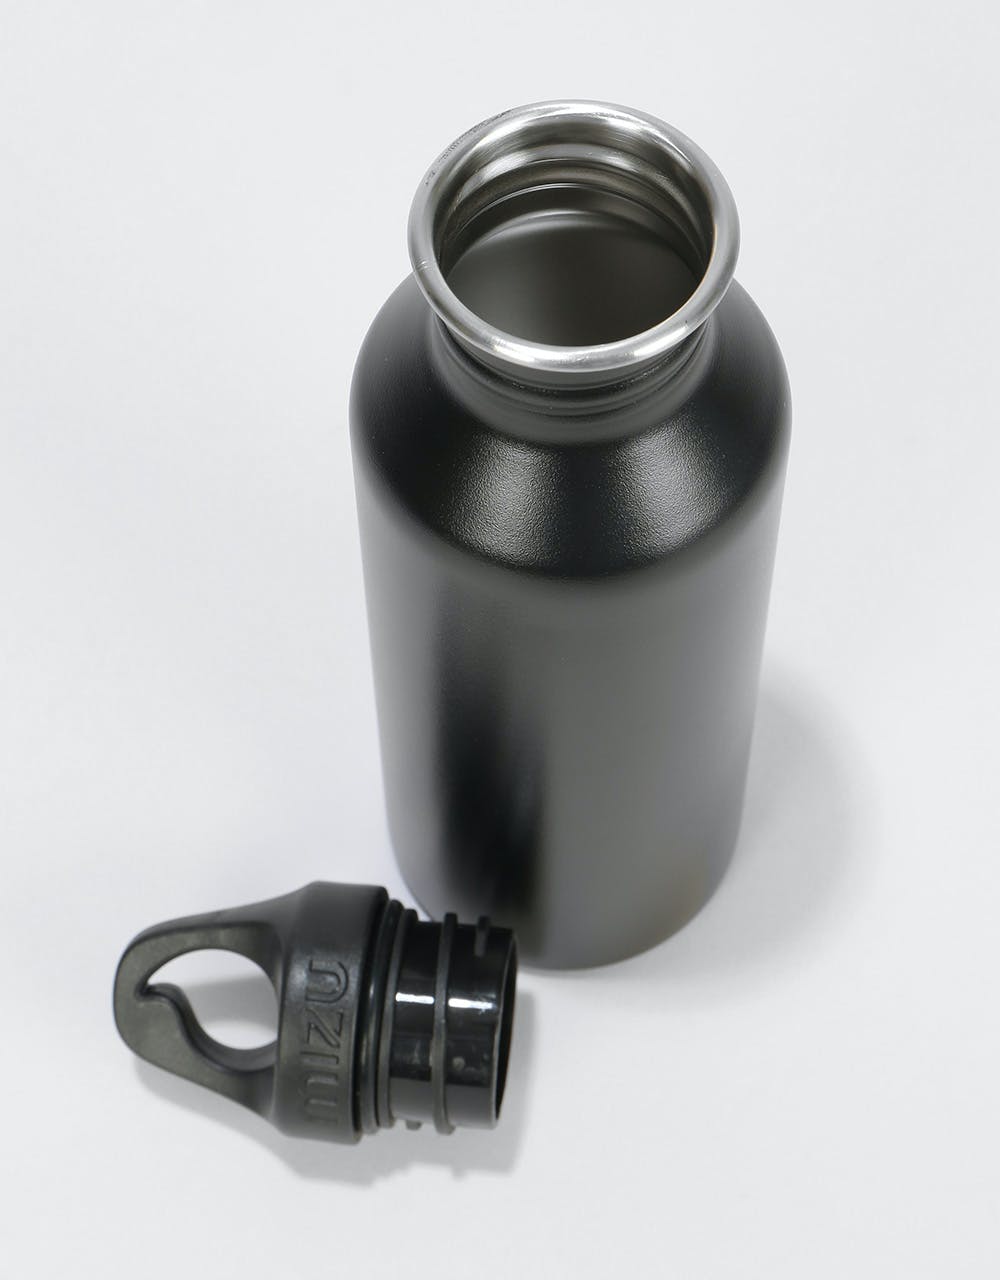 Mizu M5 Single Wall 530ml/18oz Water Bottle - Black